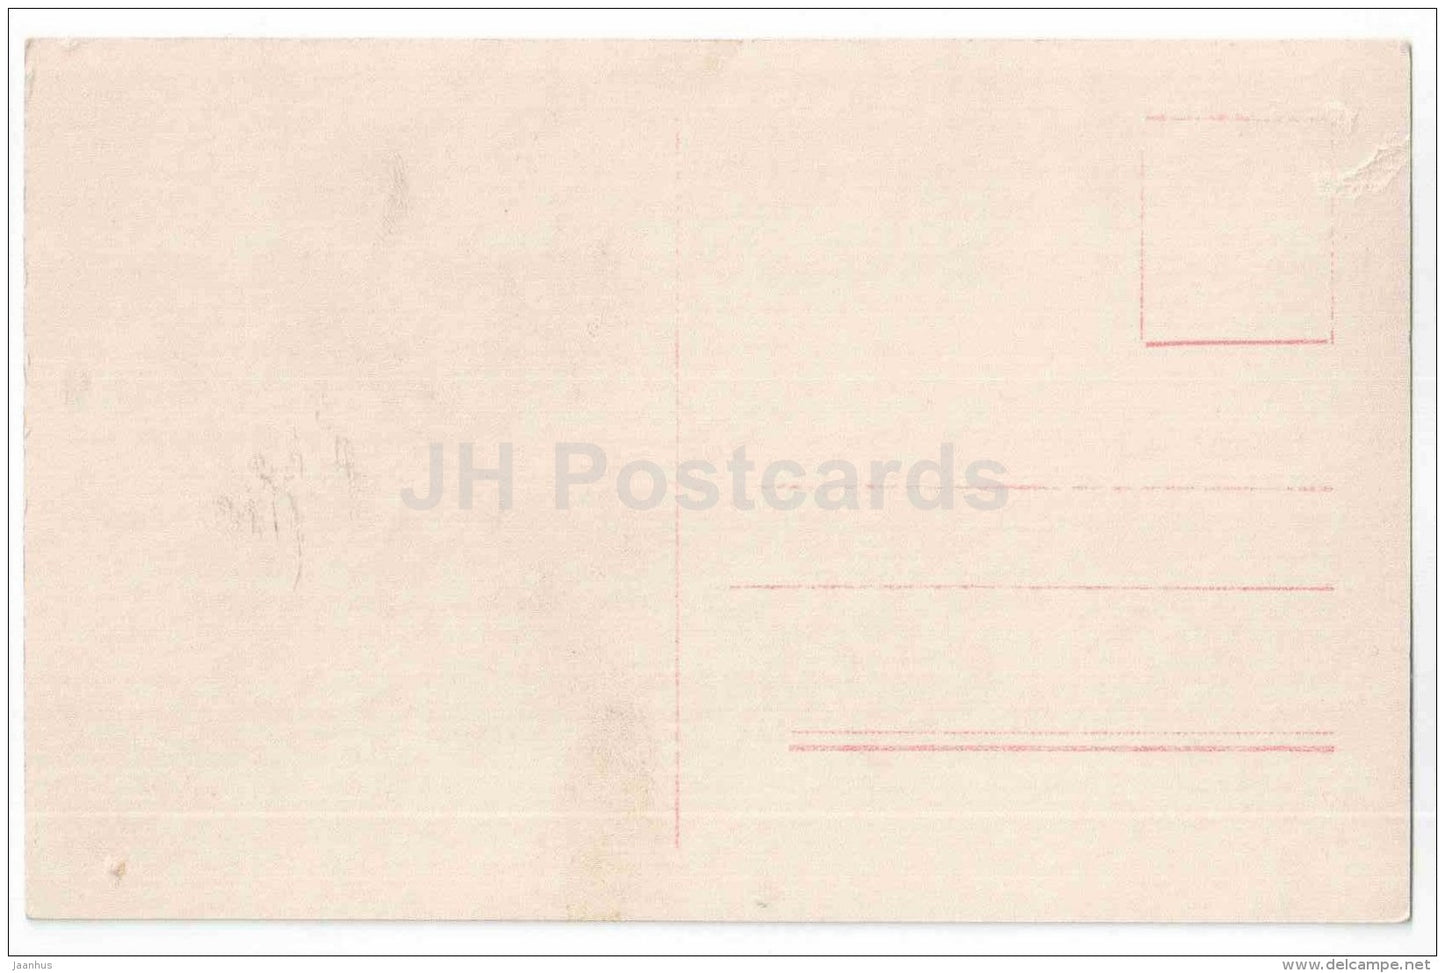 Lucy Doraine - movie actress - film - 1677/1 - old postcard - Germany - unused - JH Postcards